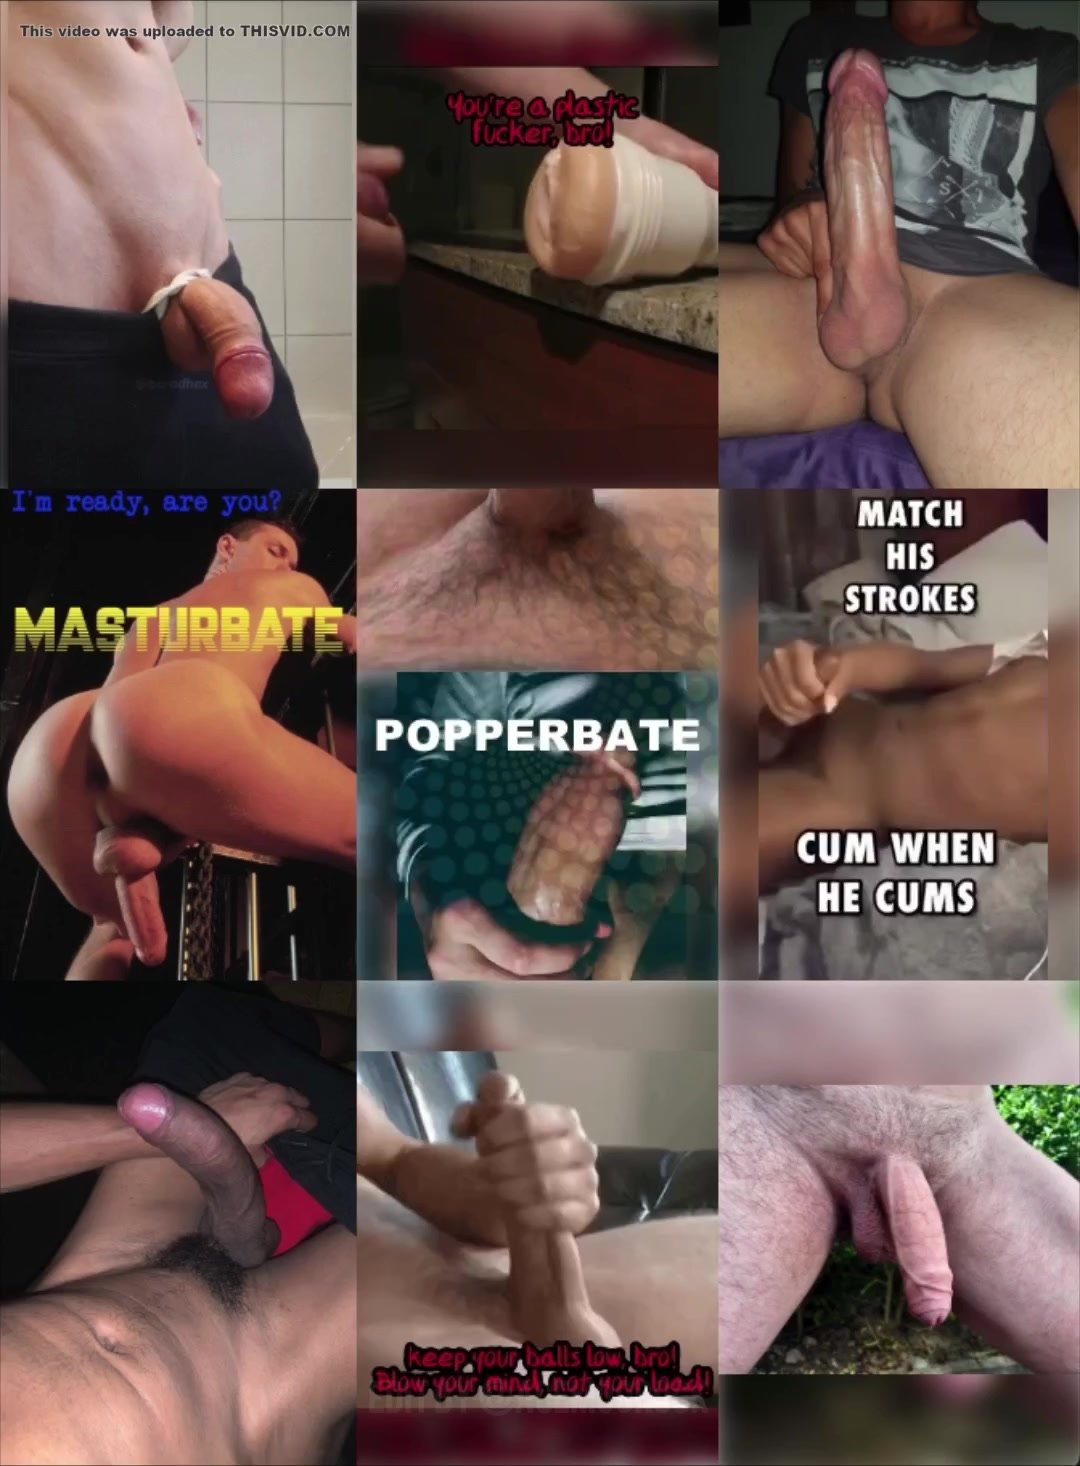 chris oberst share porn penis pic photos